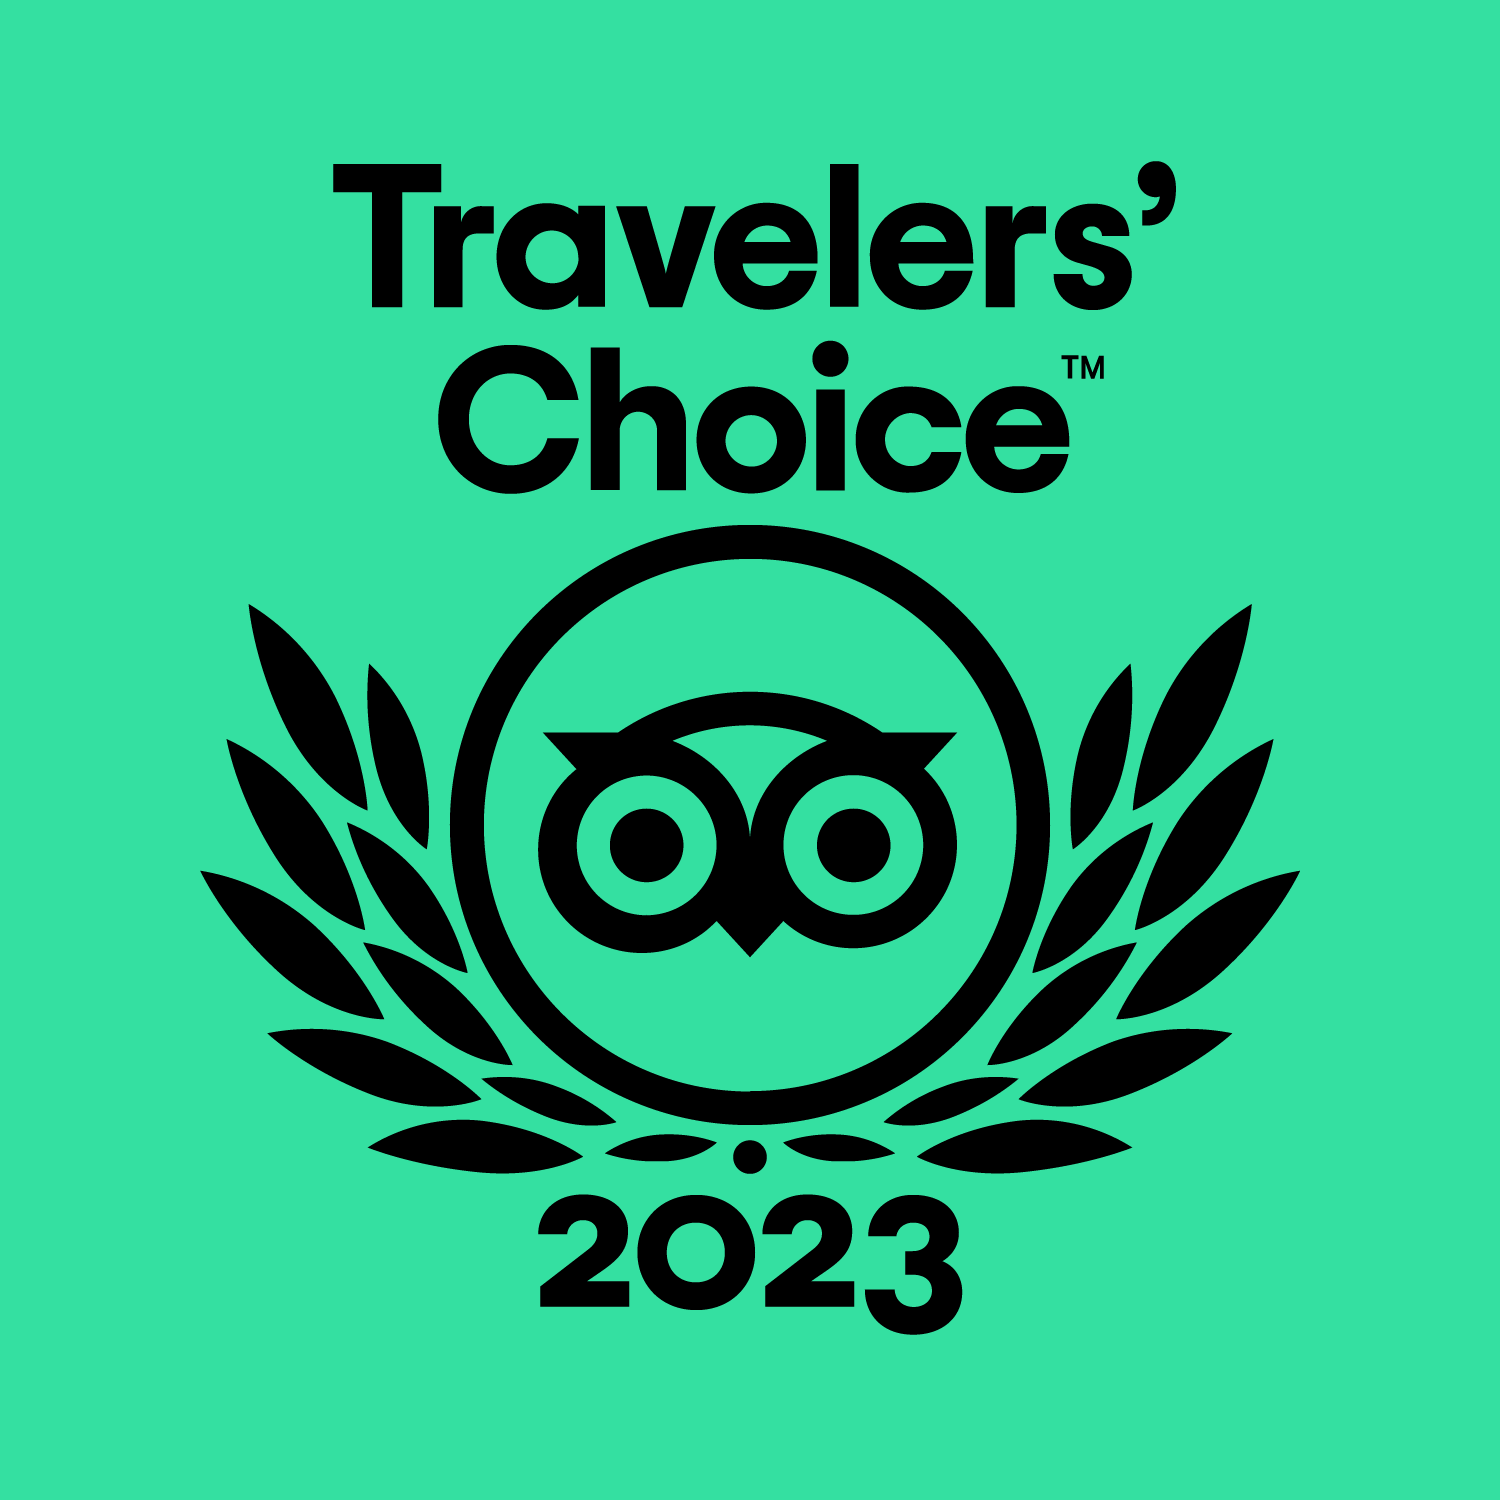 premio travelers' choice 2023 de tripadvisor